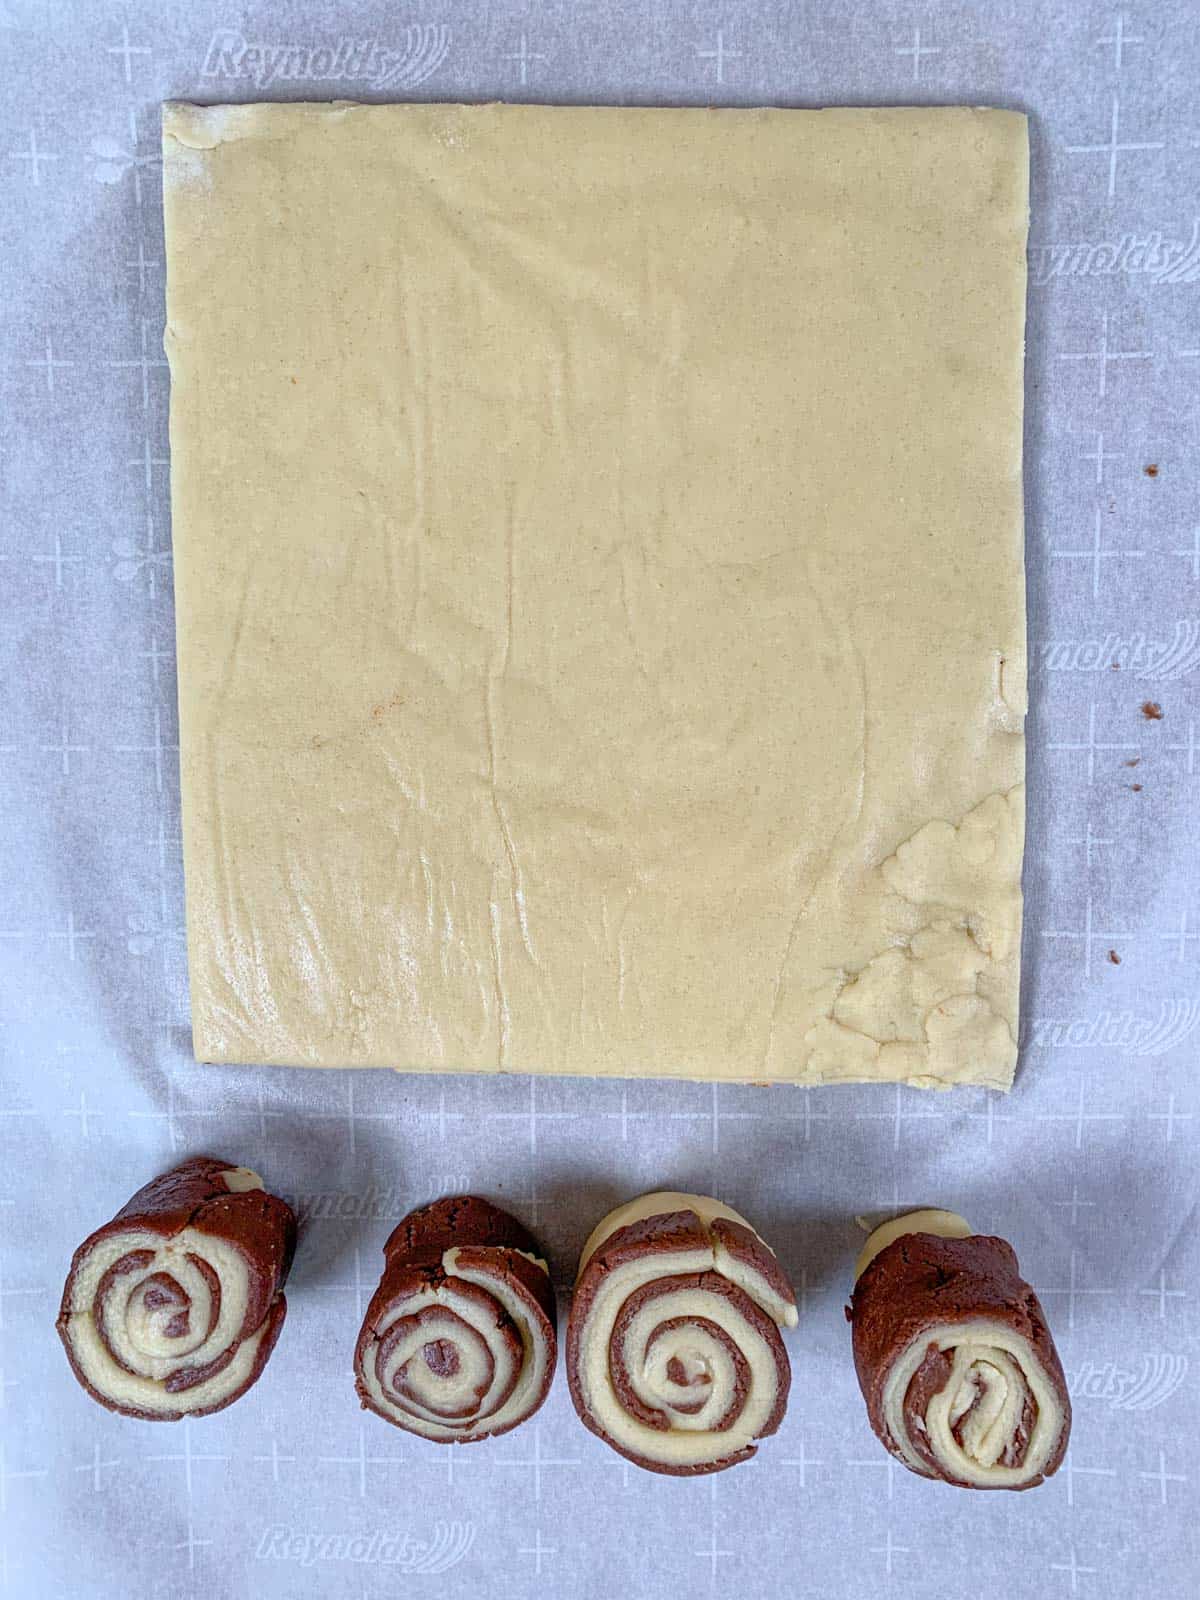 pinwheel cookie dough cut in a large rectangular.